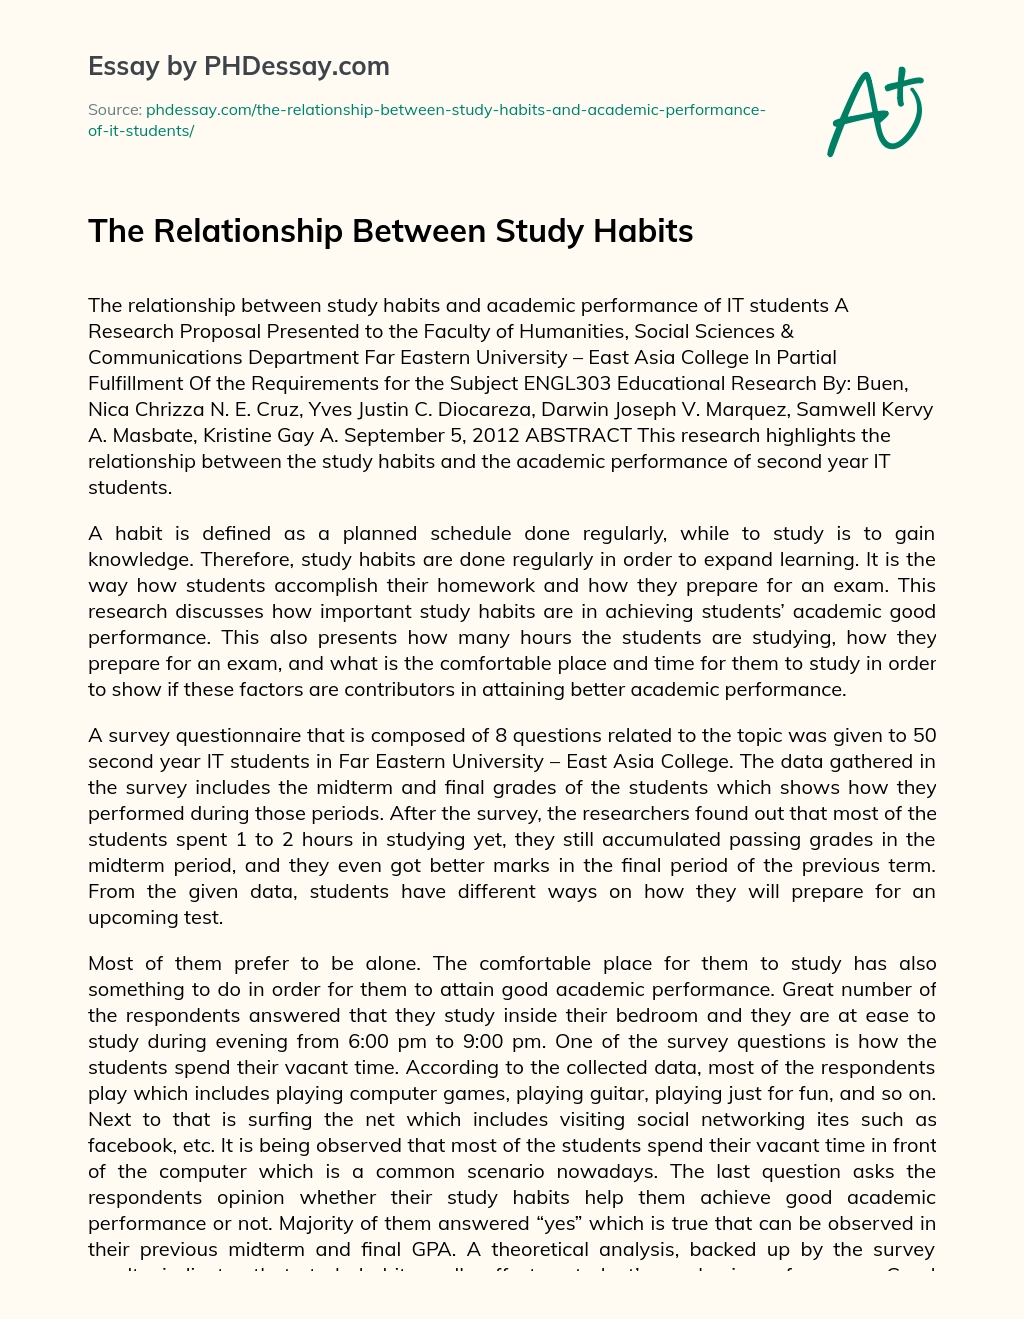 The Relationship Between Study Habits essay